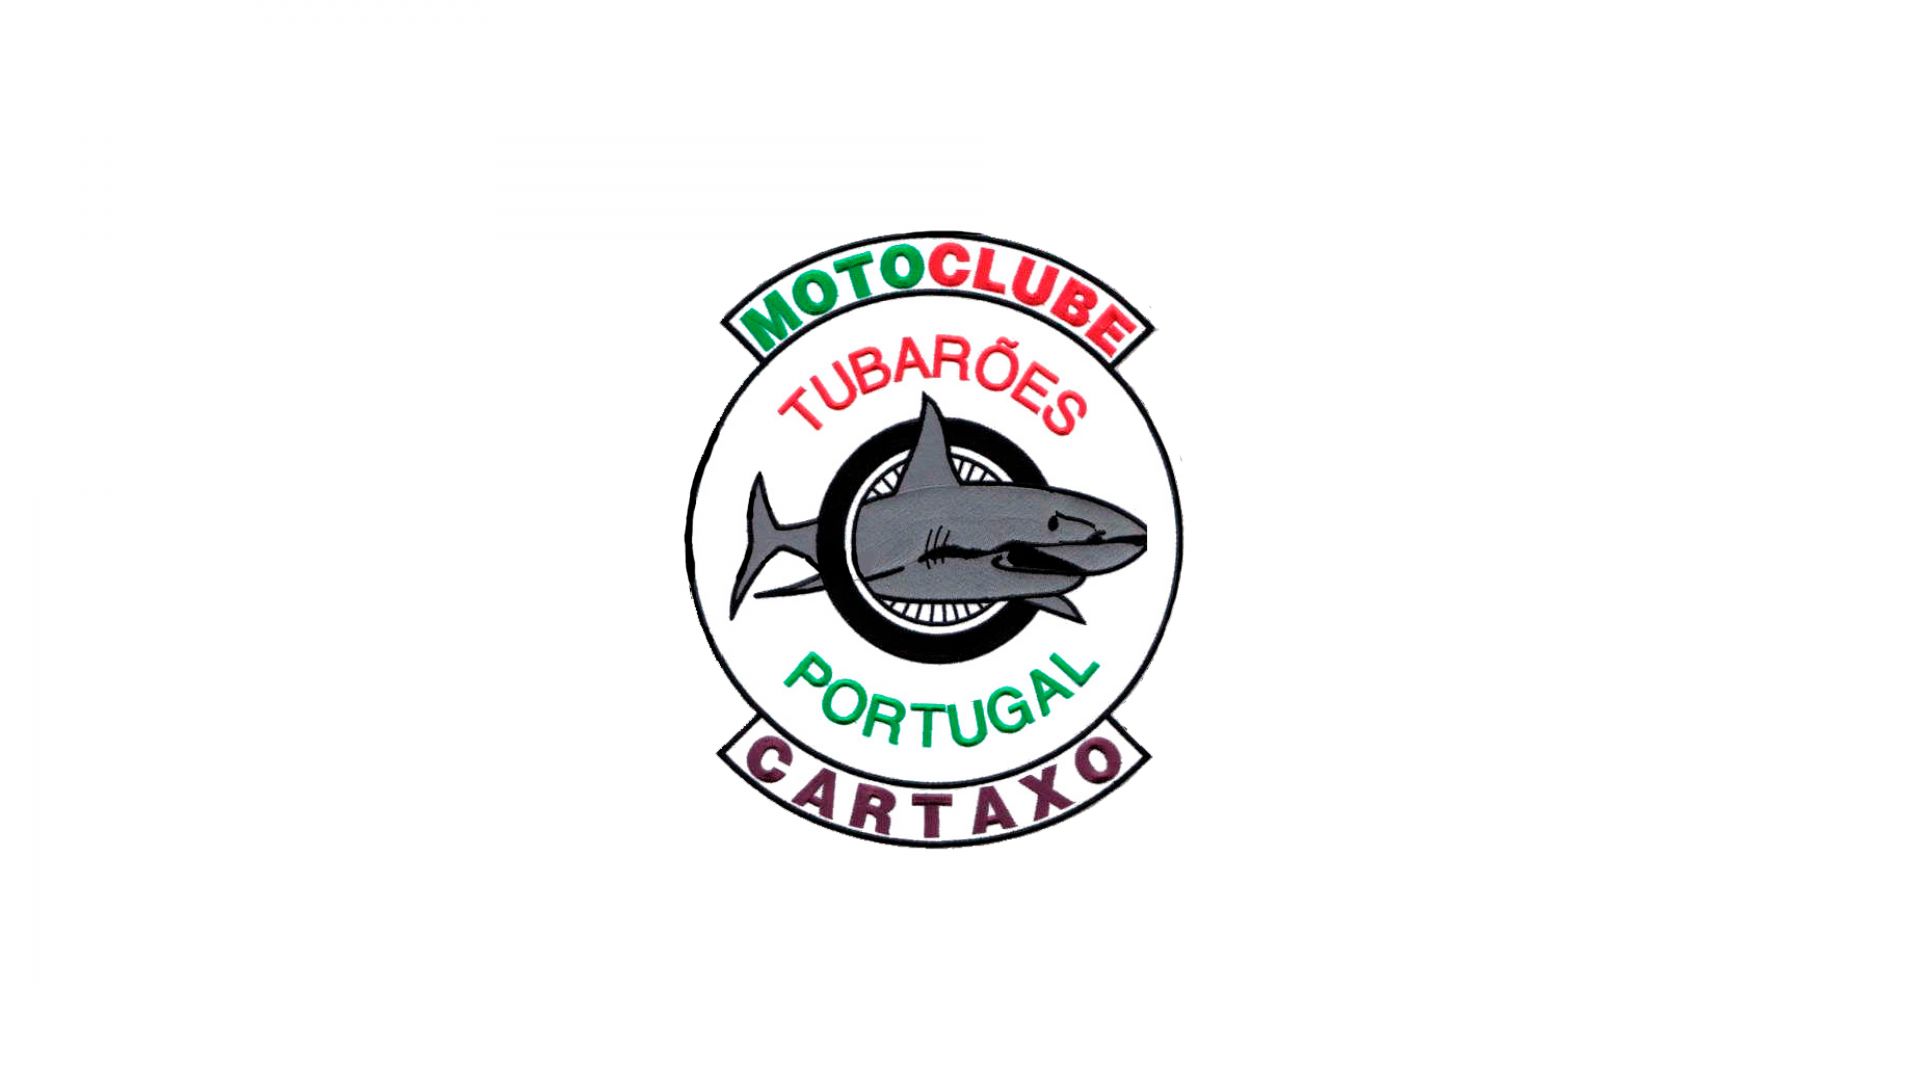 Motoclube Tubarões de Portugal